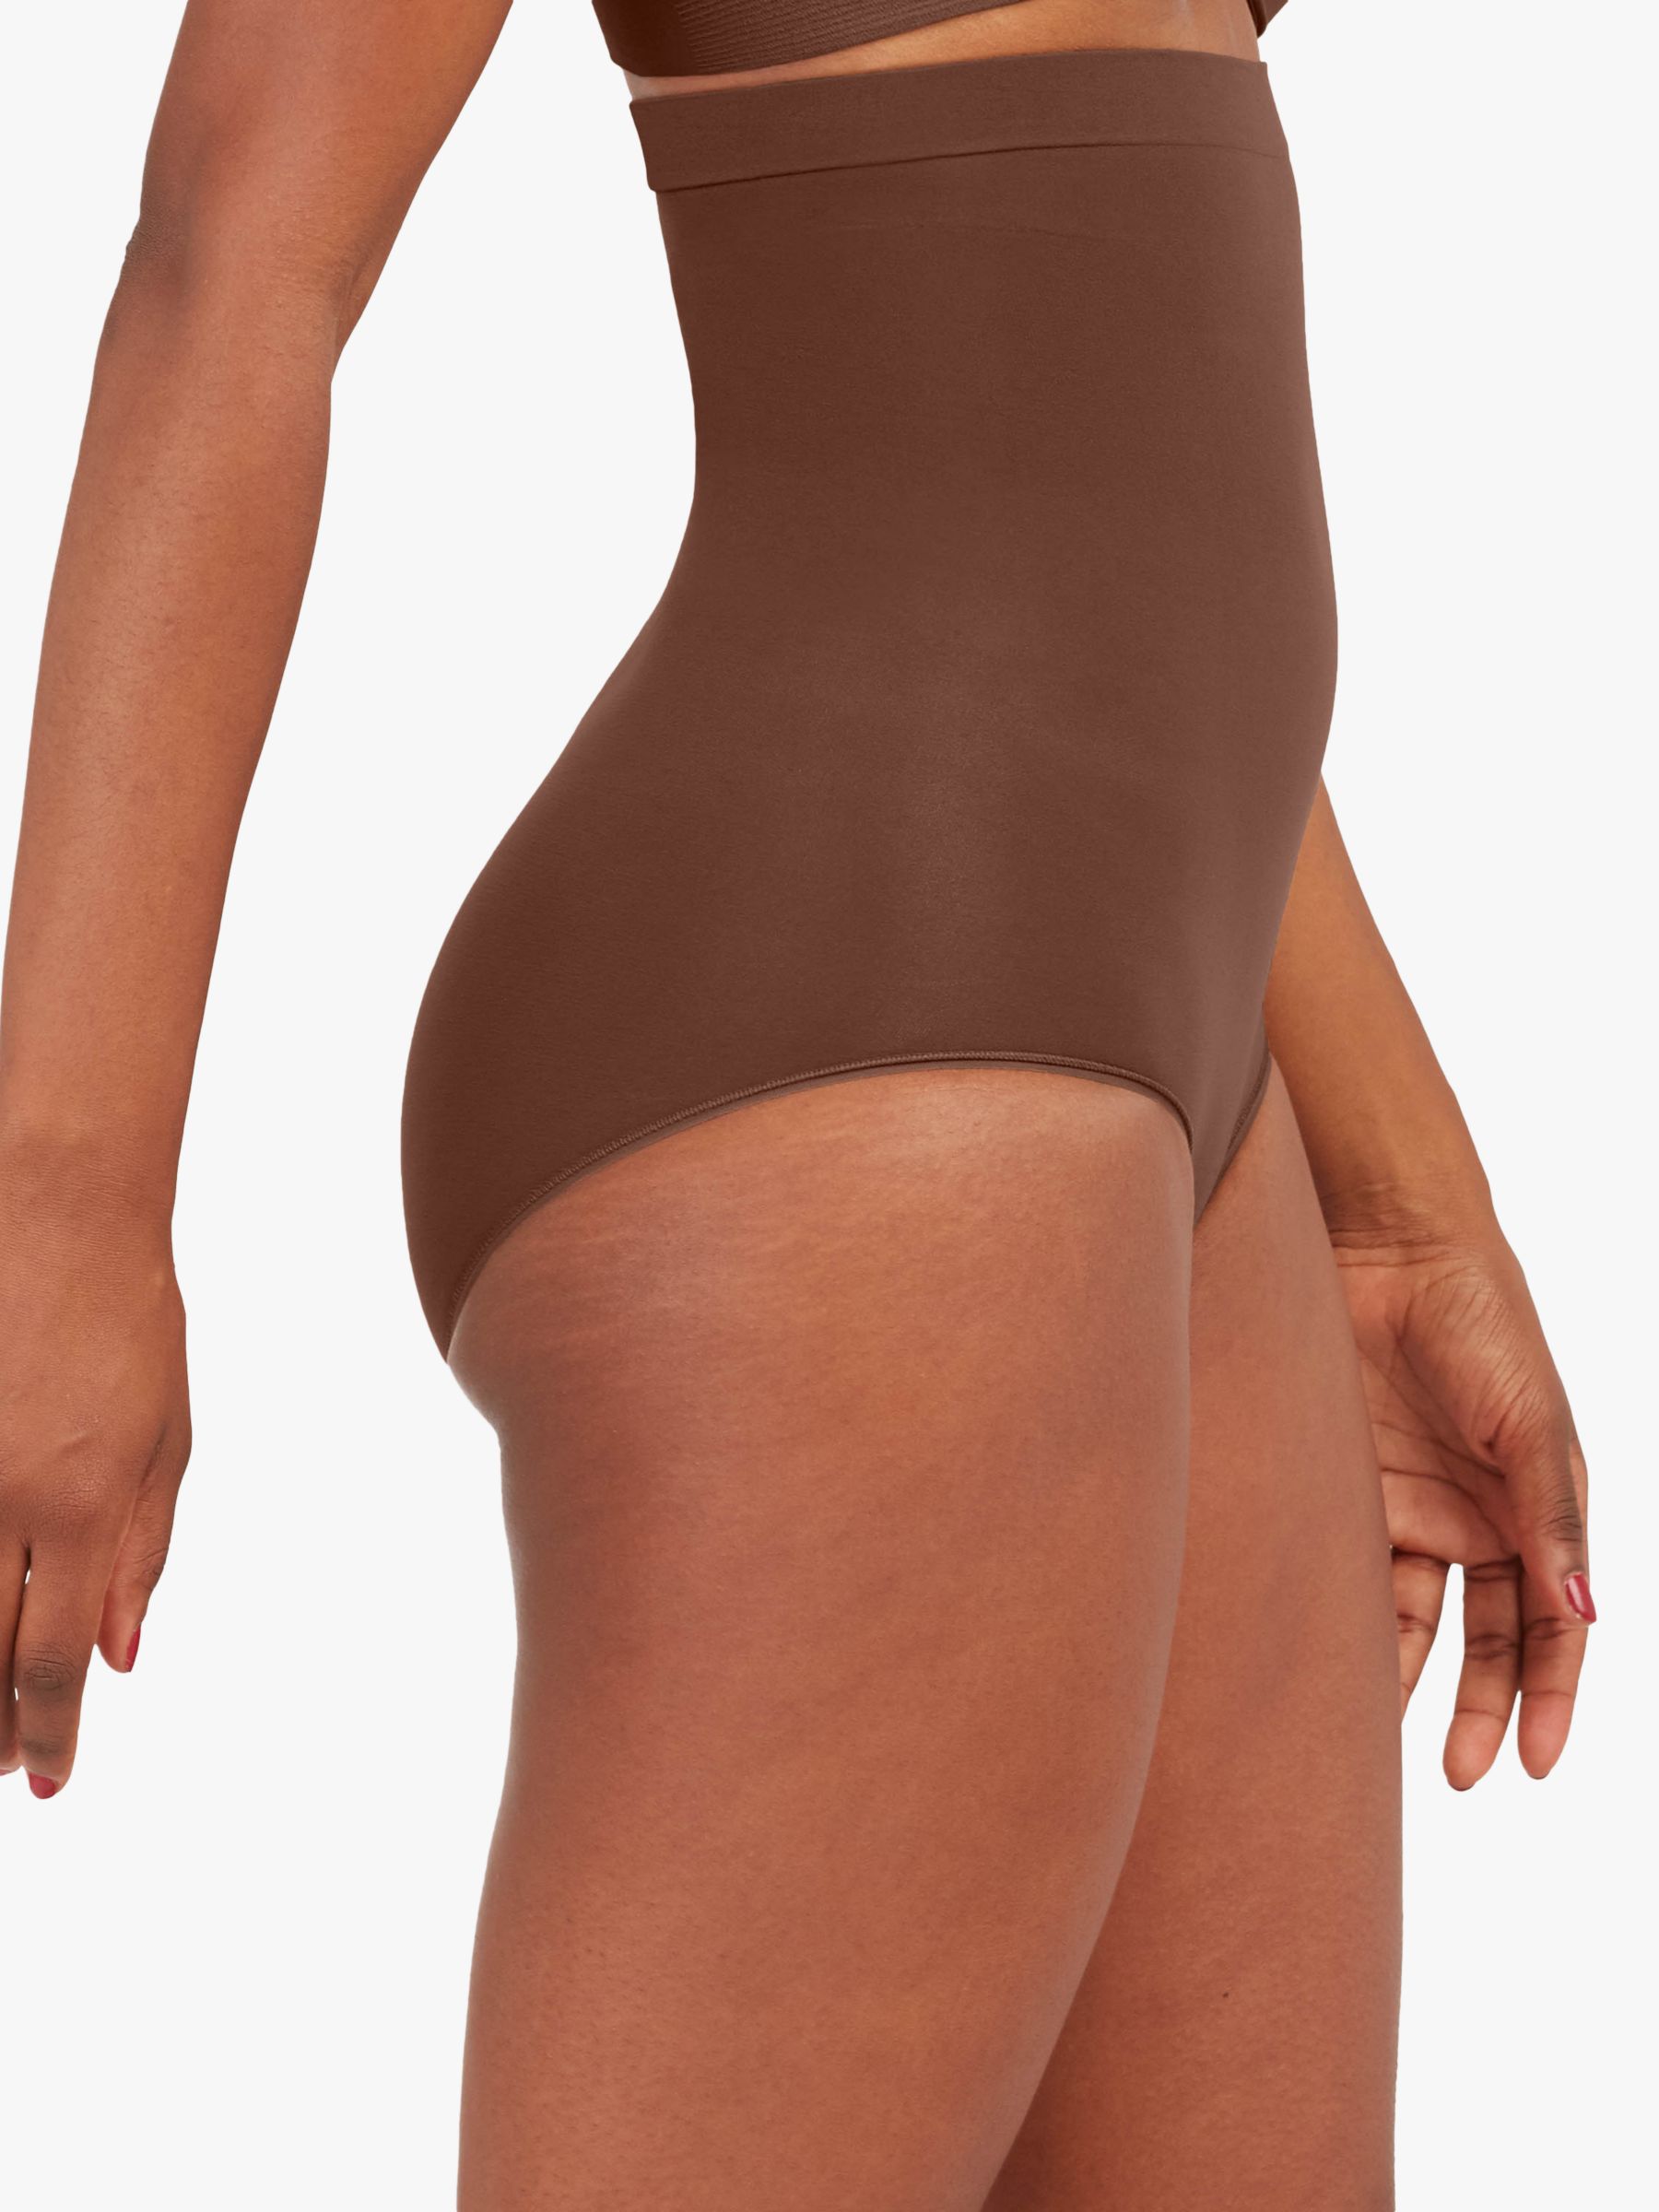 Spanx S1079 Women's Chestnut Brown Higher Power High Waist Panties Size 3X